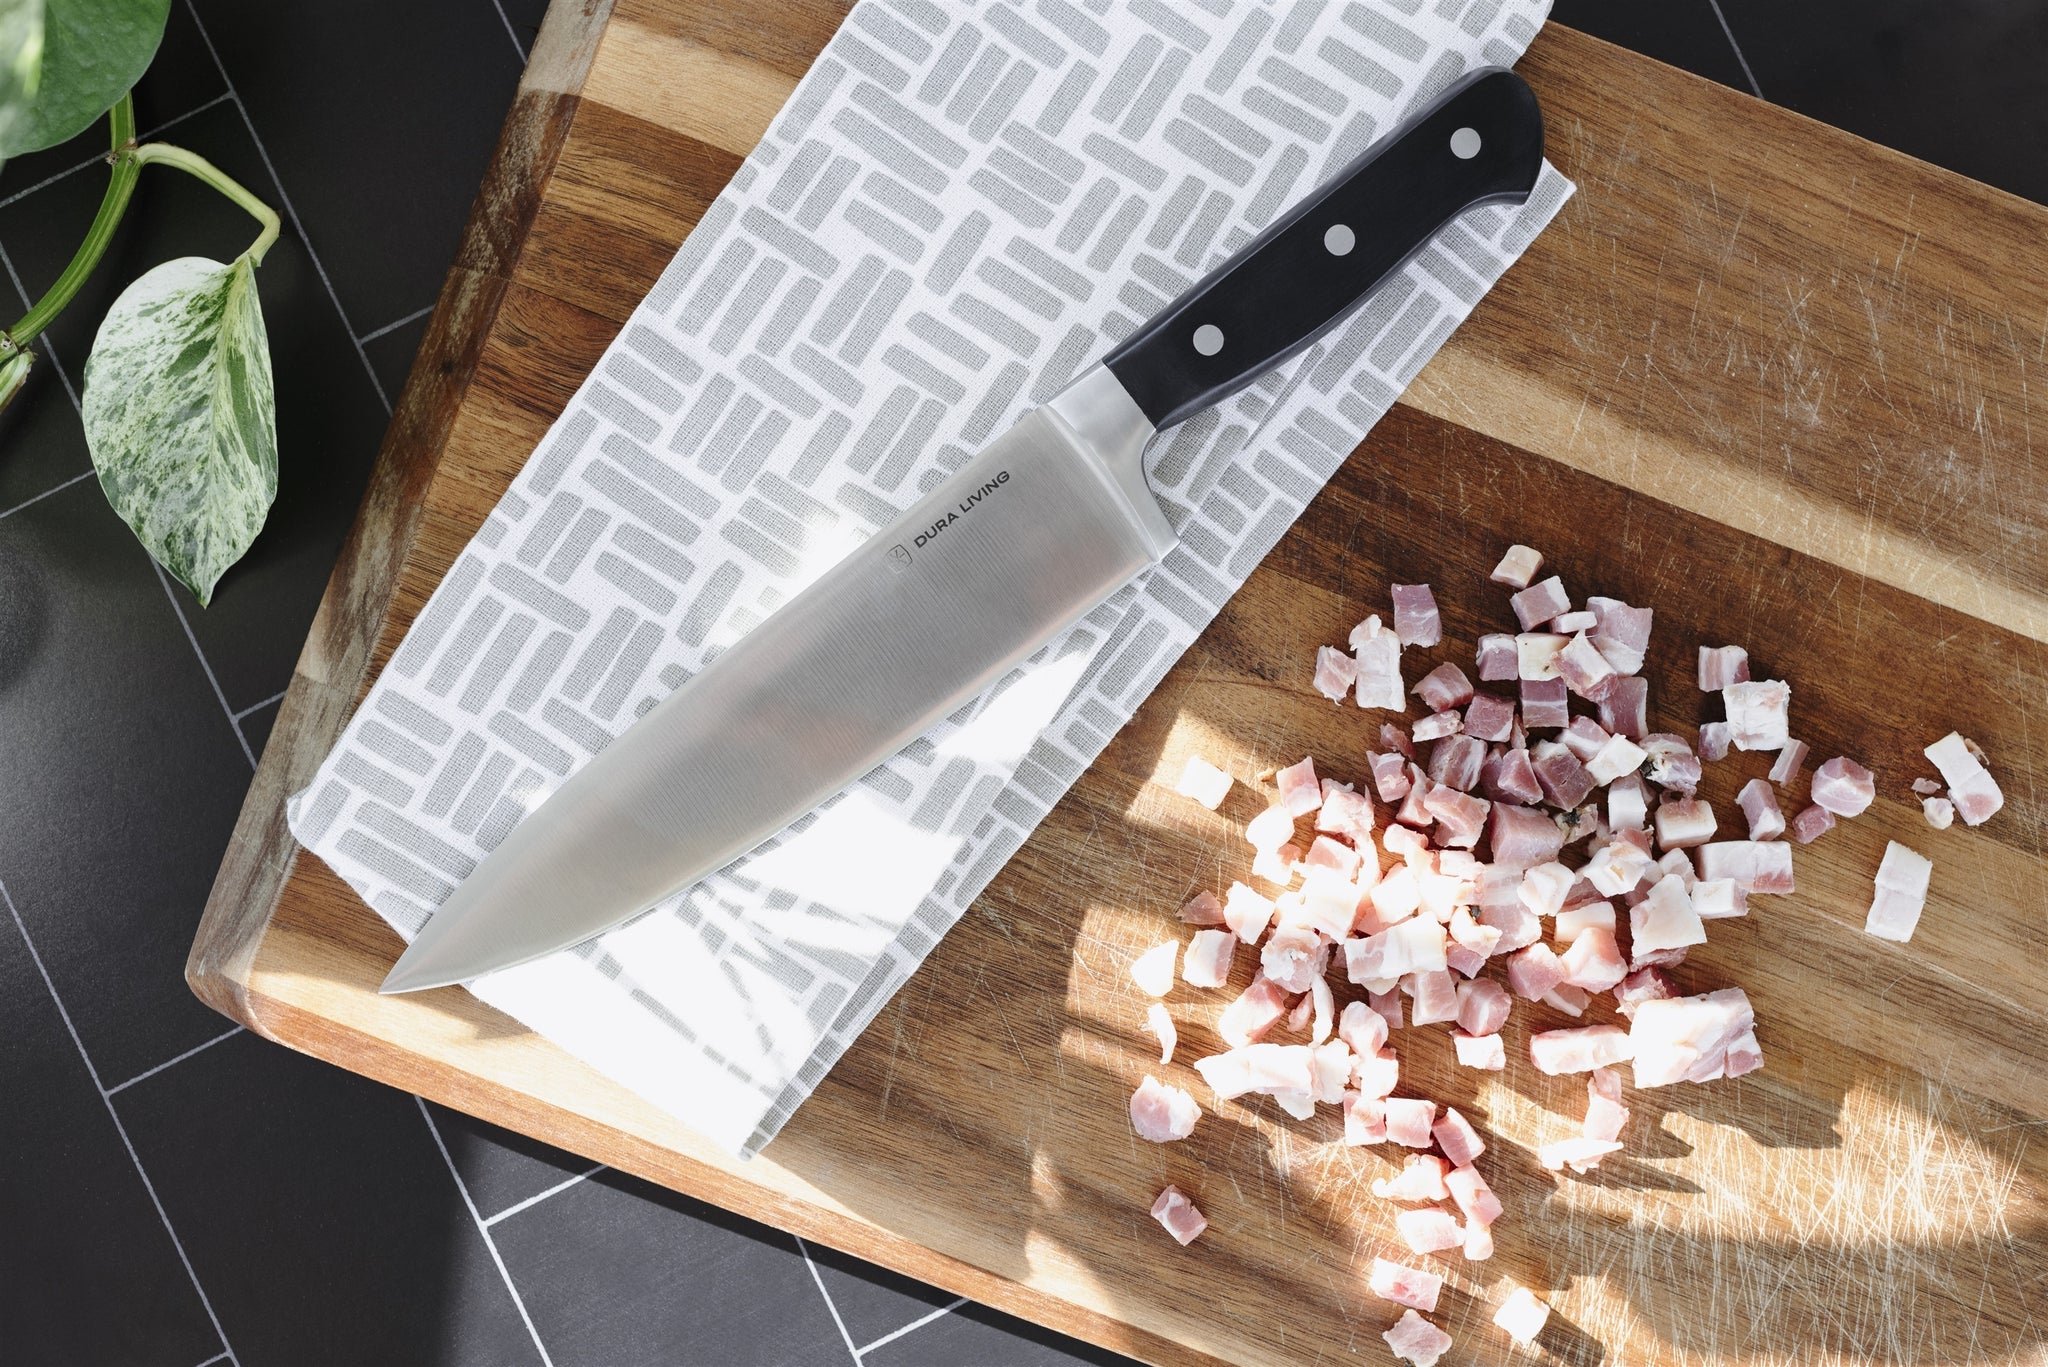 Superior 8 inch Chef Knife - Black